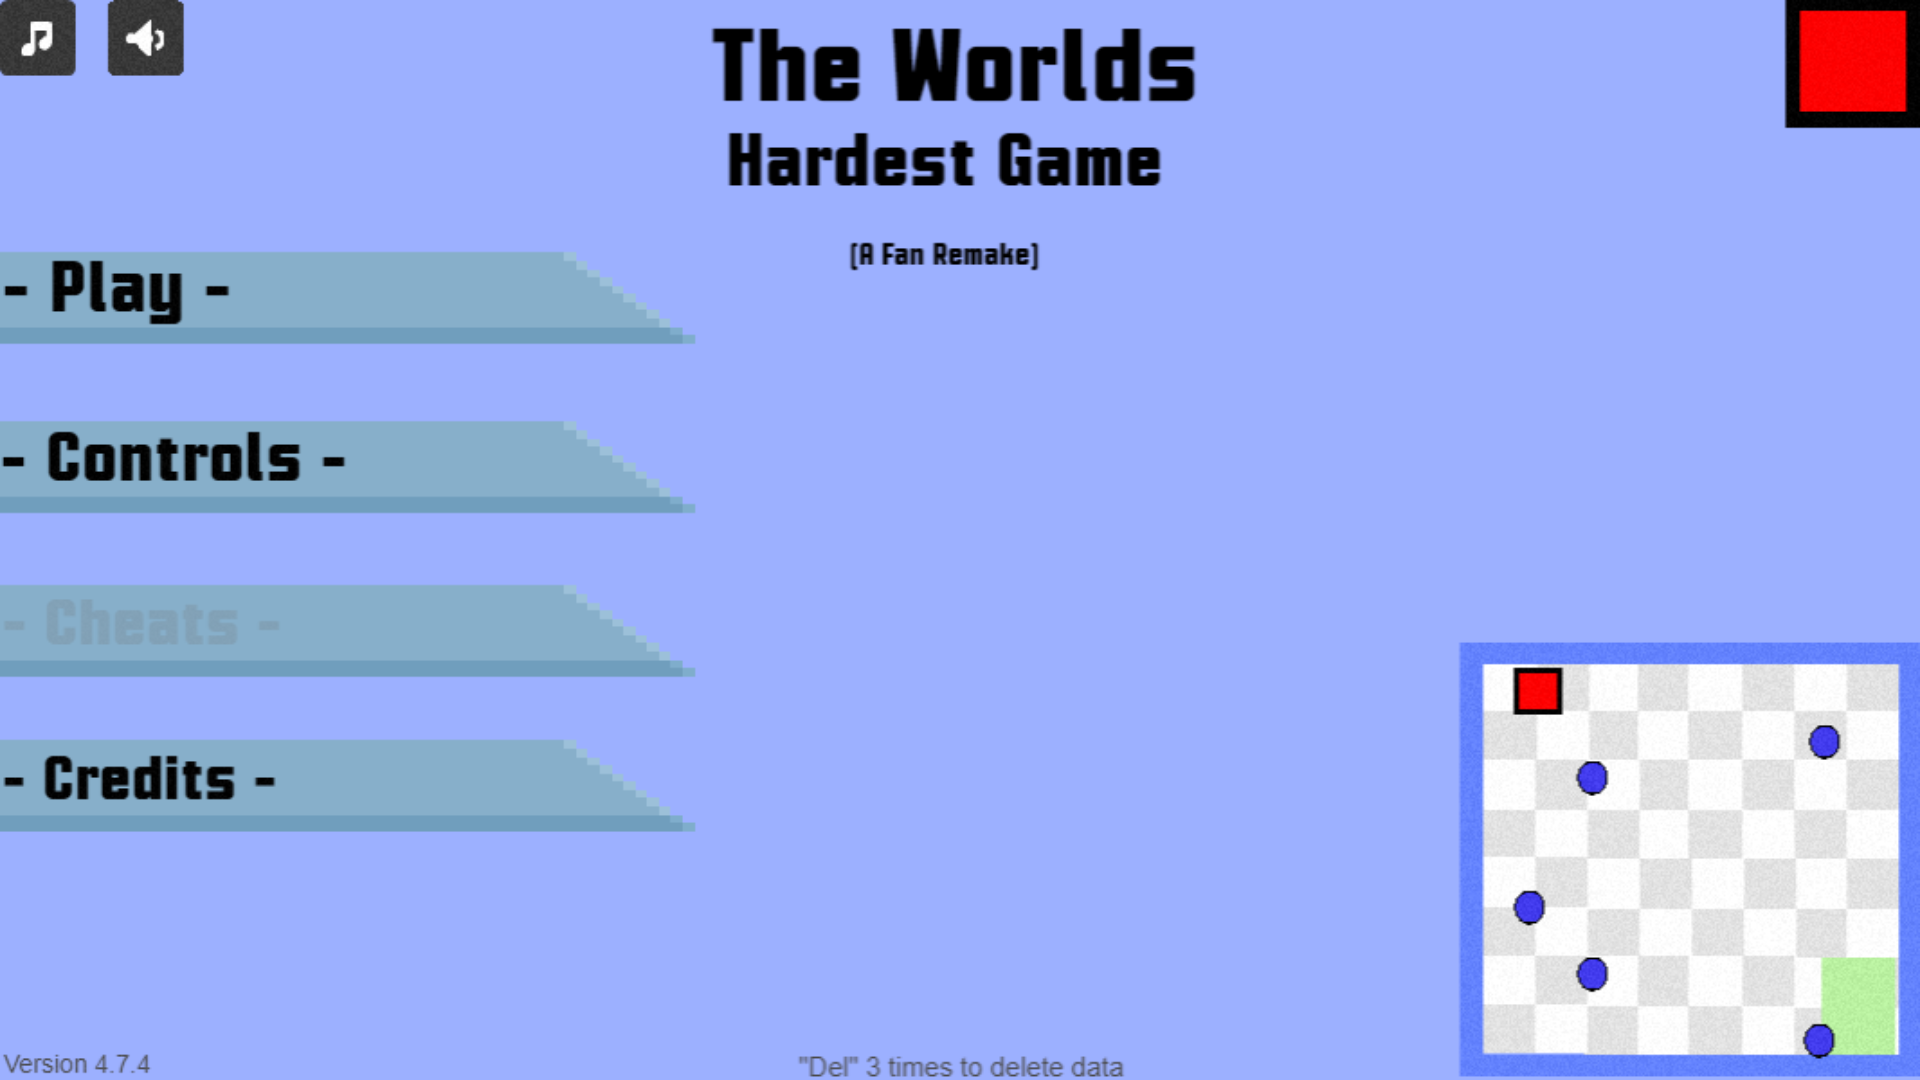 The World's Hardest Game 3 (Coolmath) (Part 1) 